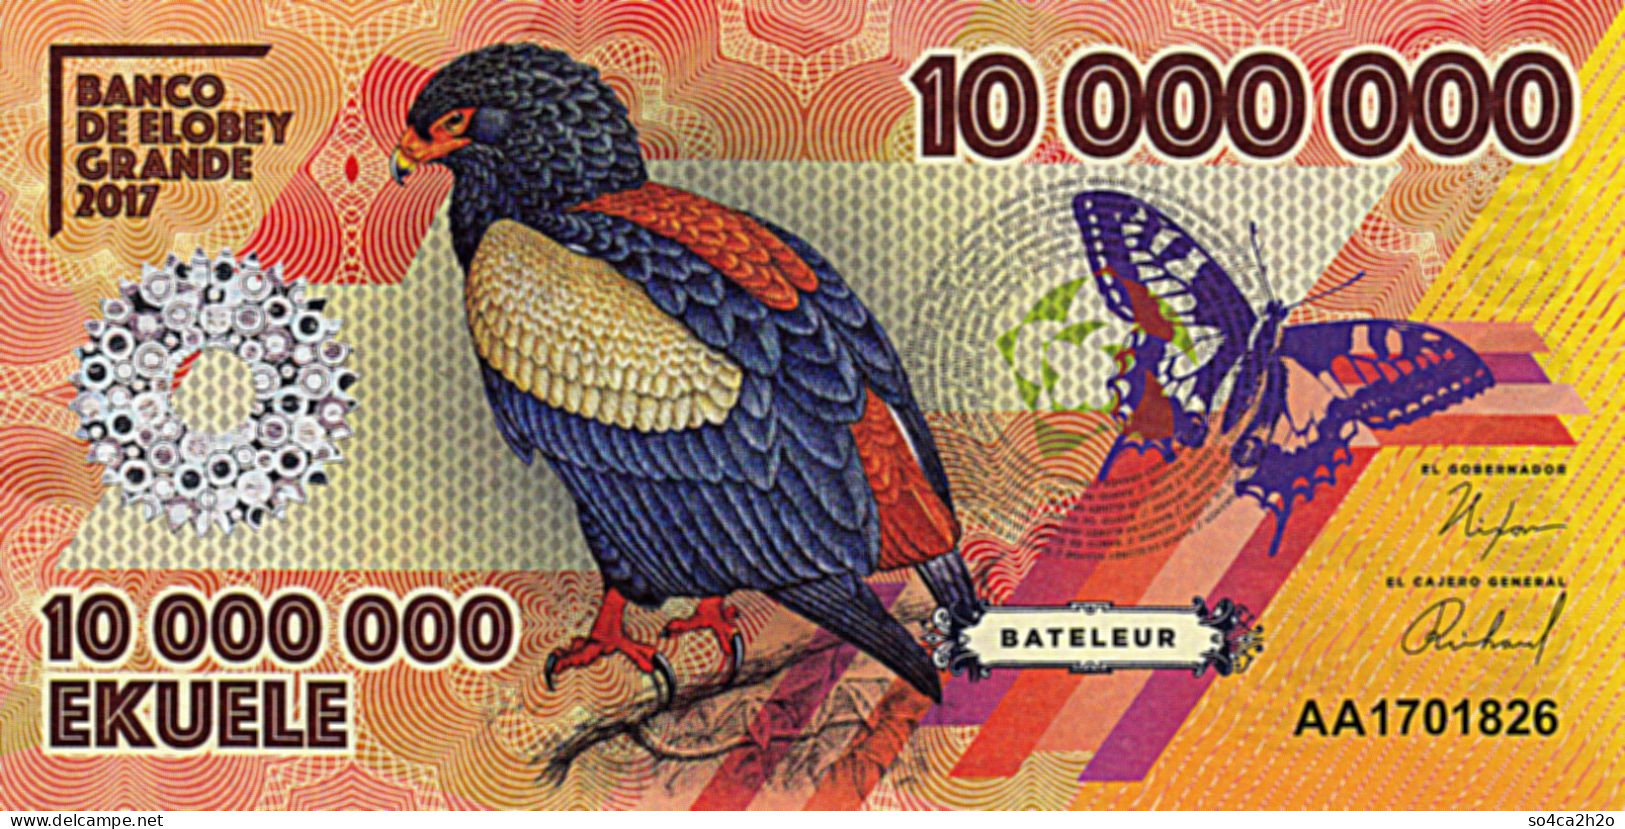 Banco De Elobey Grande 10 00 000 EKUELE 2017 Bateleur UNC - Equatorial Guinea